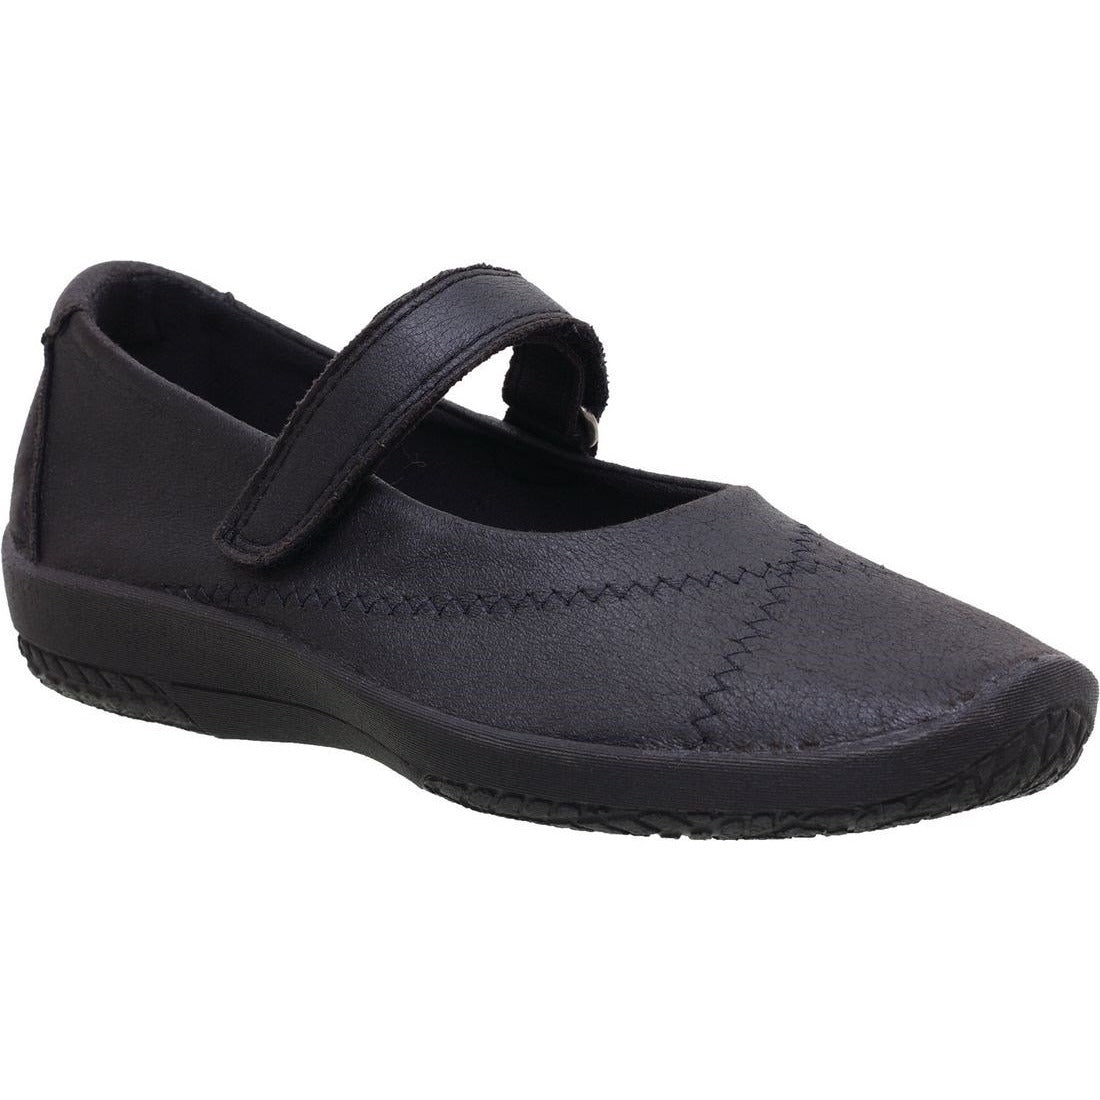 ARCOPEDICO L18 BLACK - getset-footwear.myshopify.com